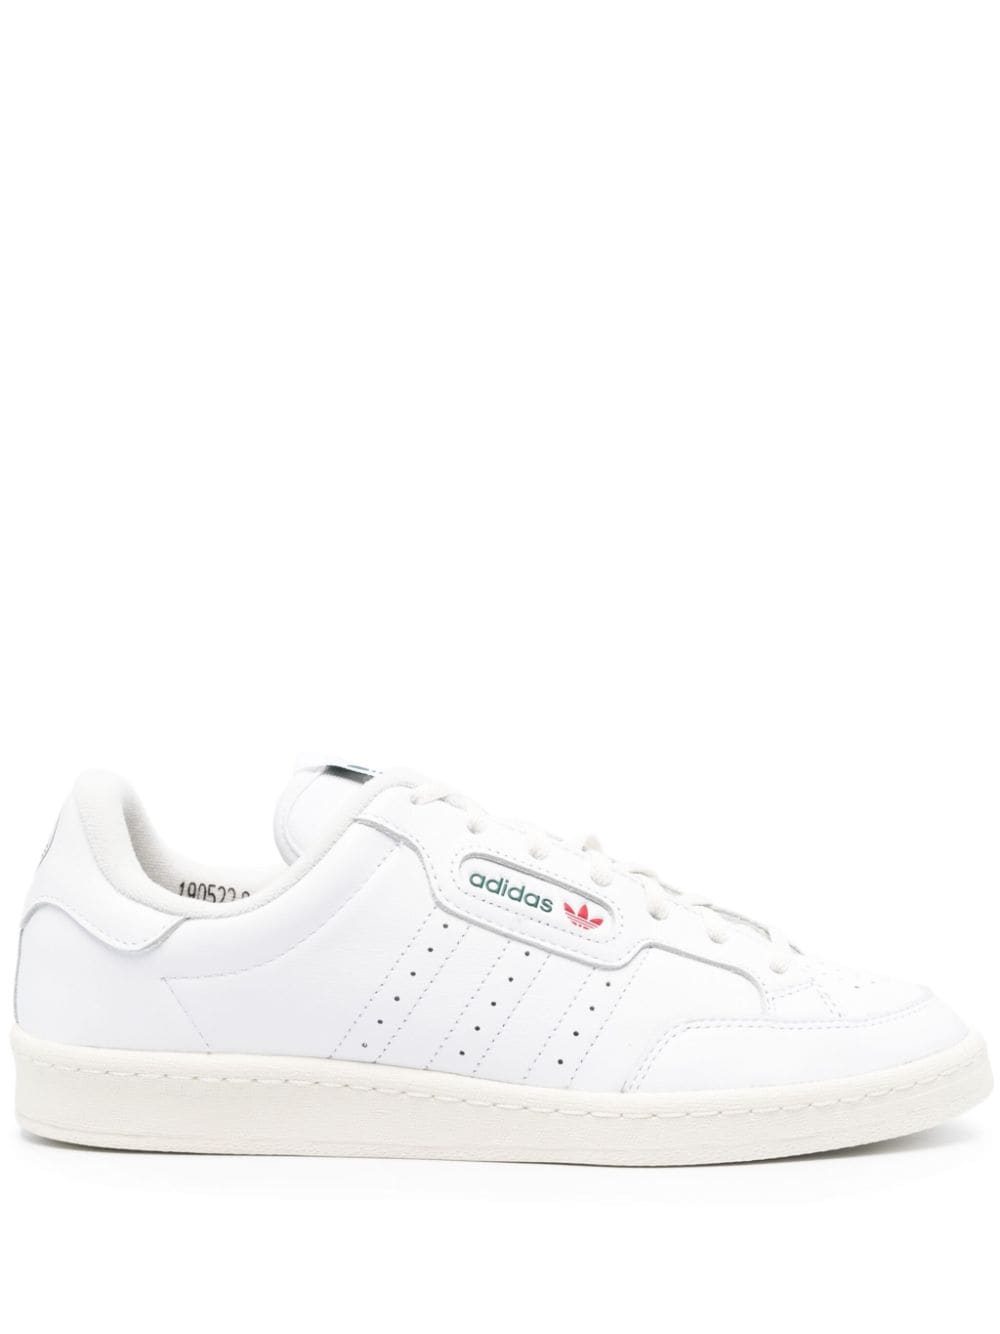 Adidas Originals Englewood Spzl Sneakers In White